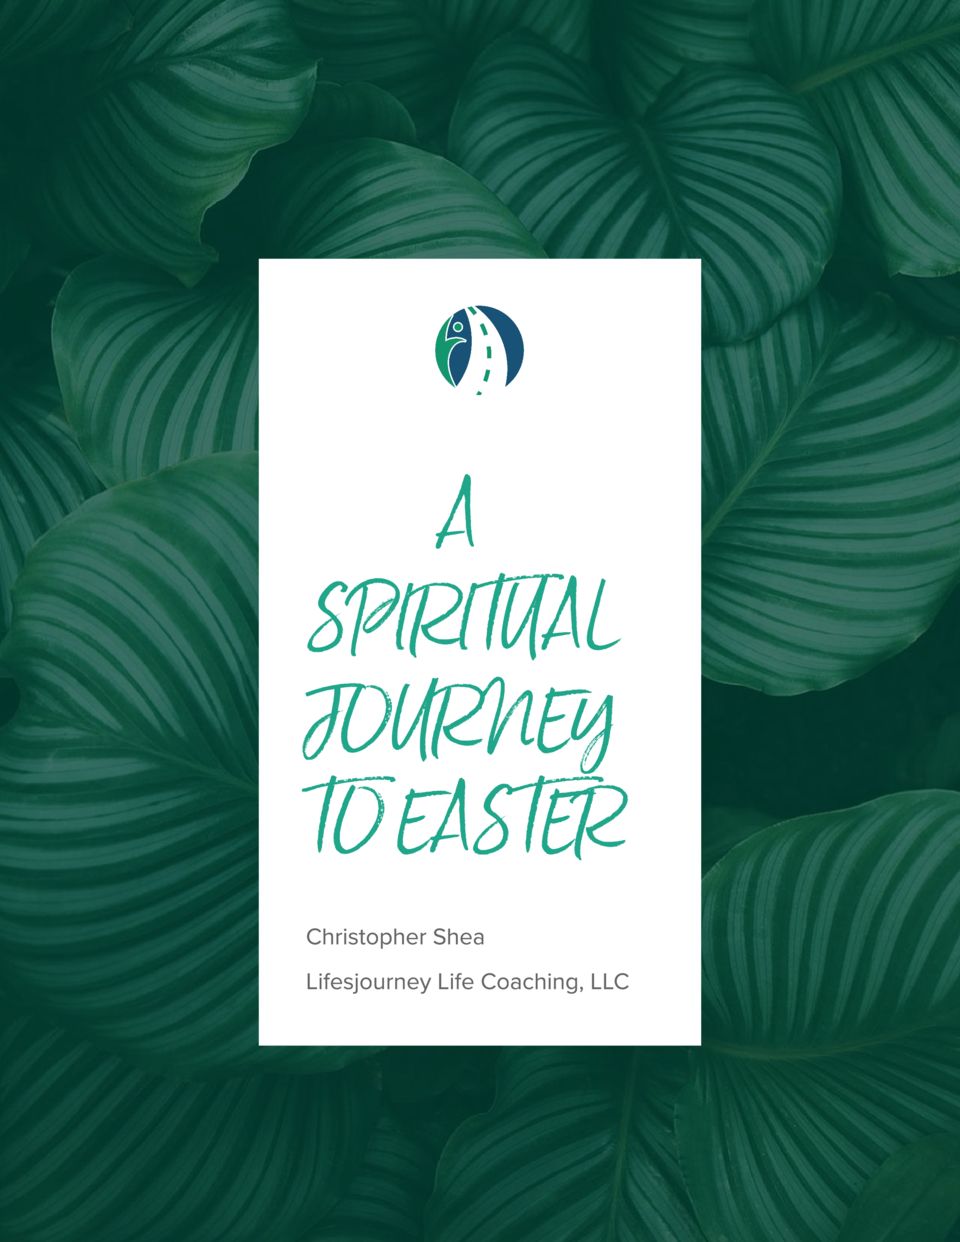 Easter reflection booklet